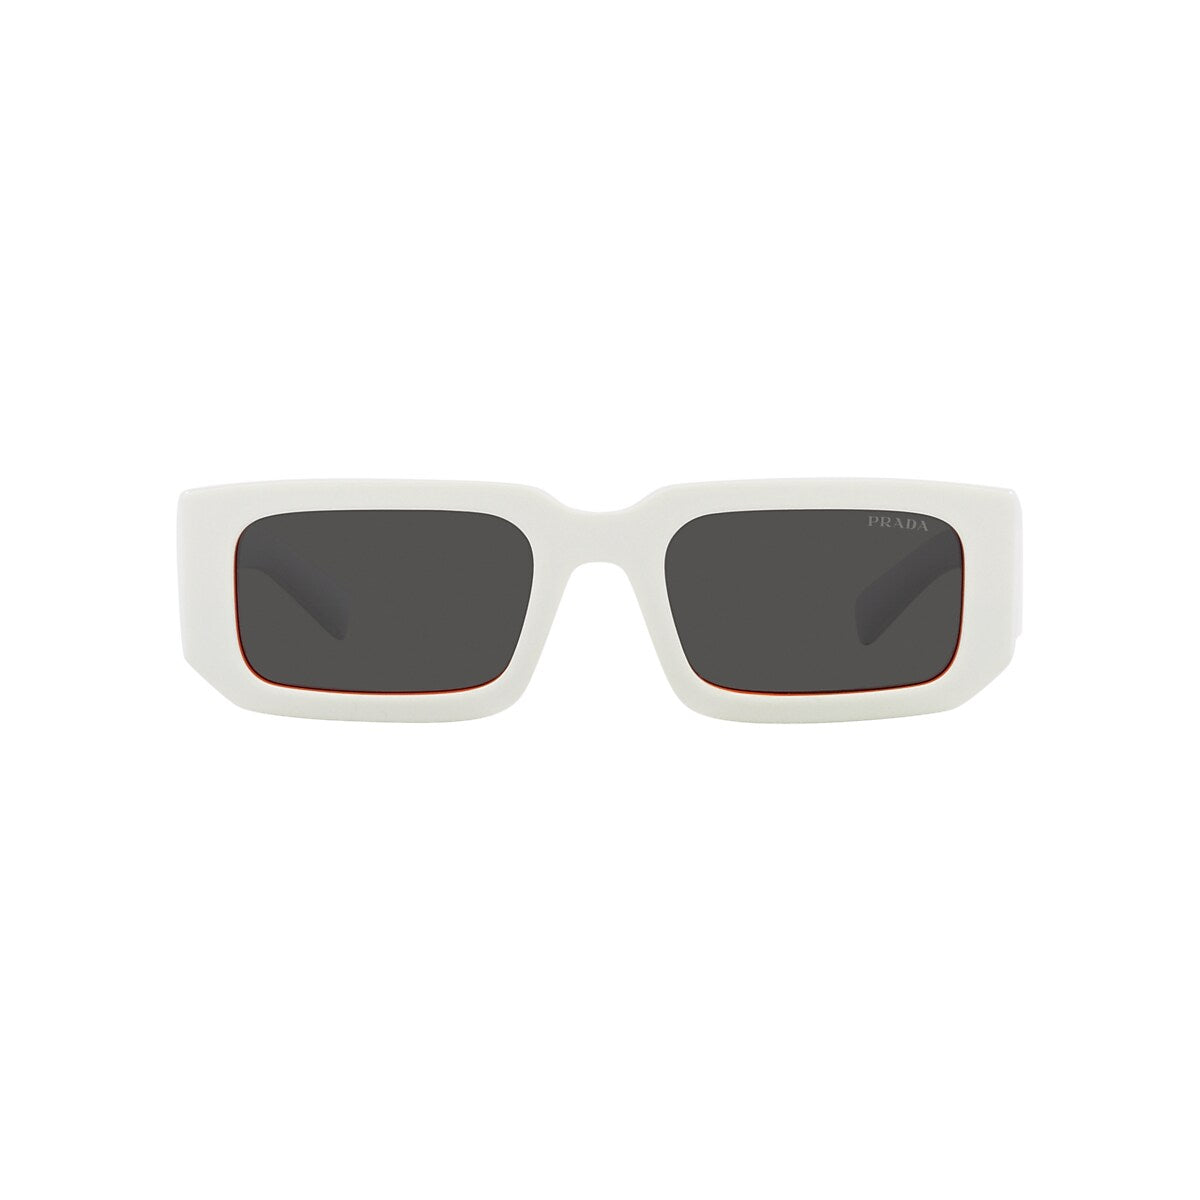 PRADA PR 06YS Talc/Orange - Men Luxury Sunglasses, Dark Grey Lens